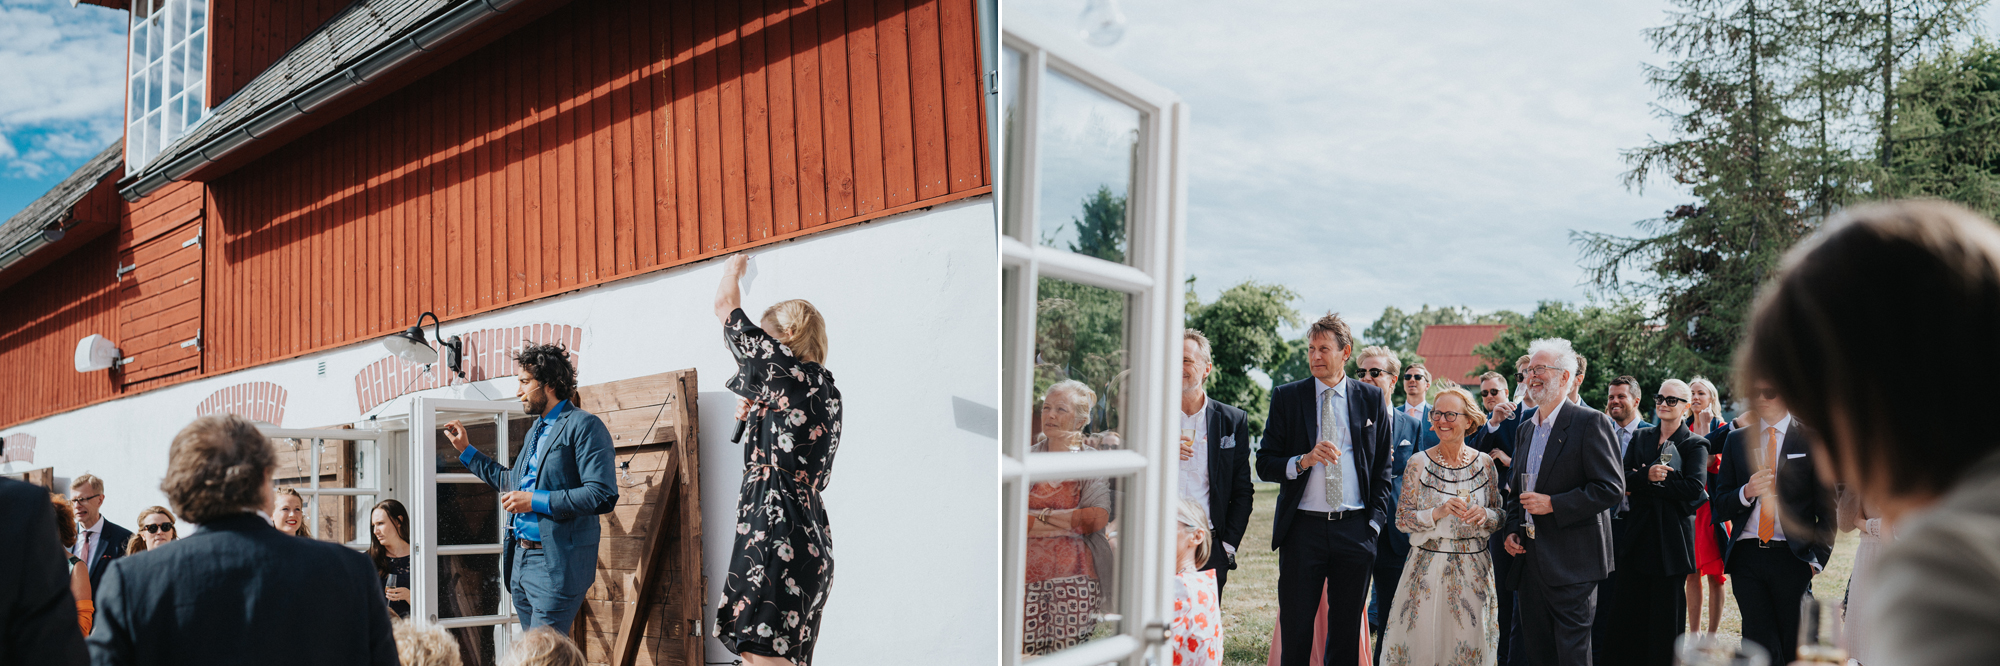 024-bröllop-hemma-hos-ulrika-gotland-neas-fotografi.jpg